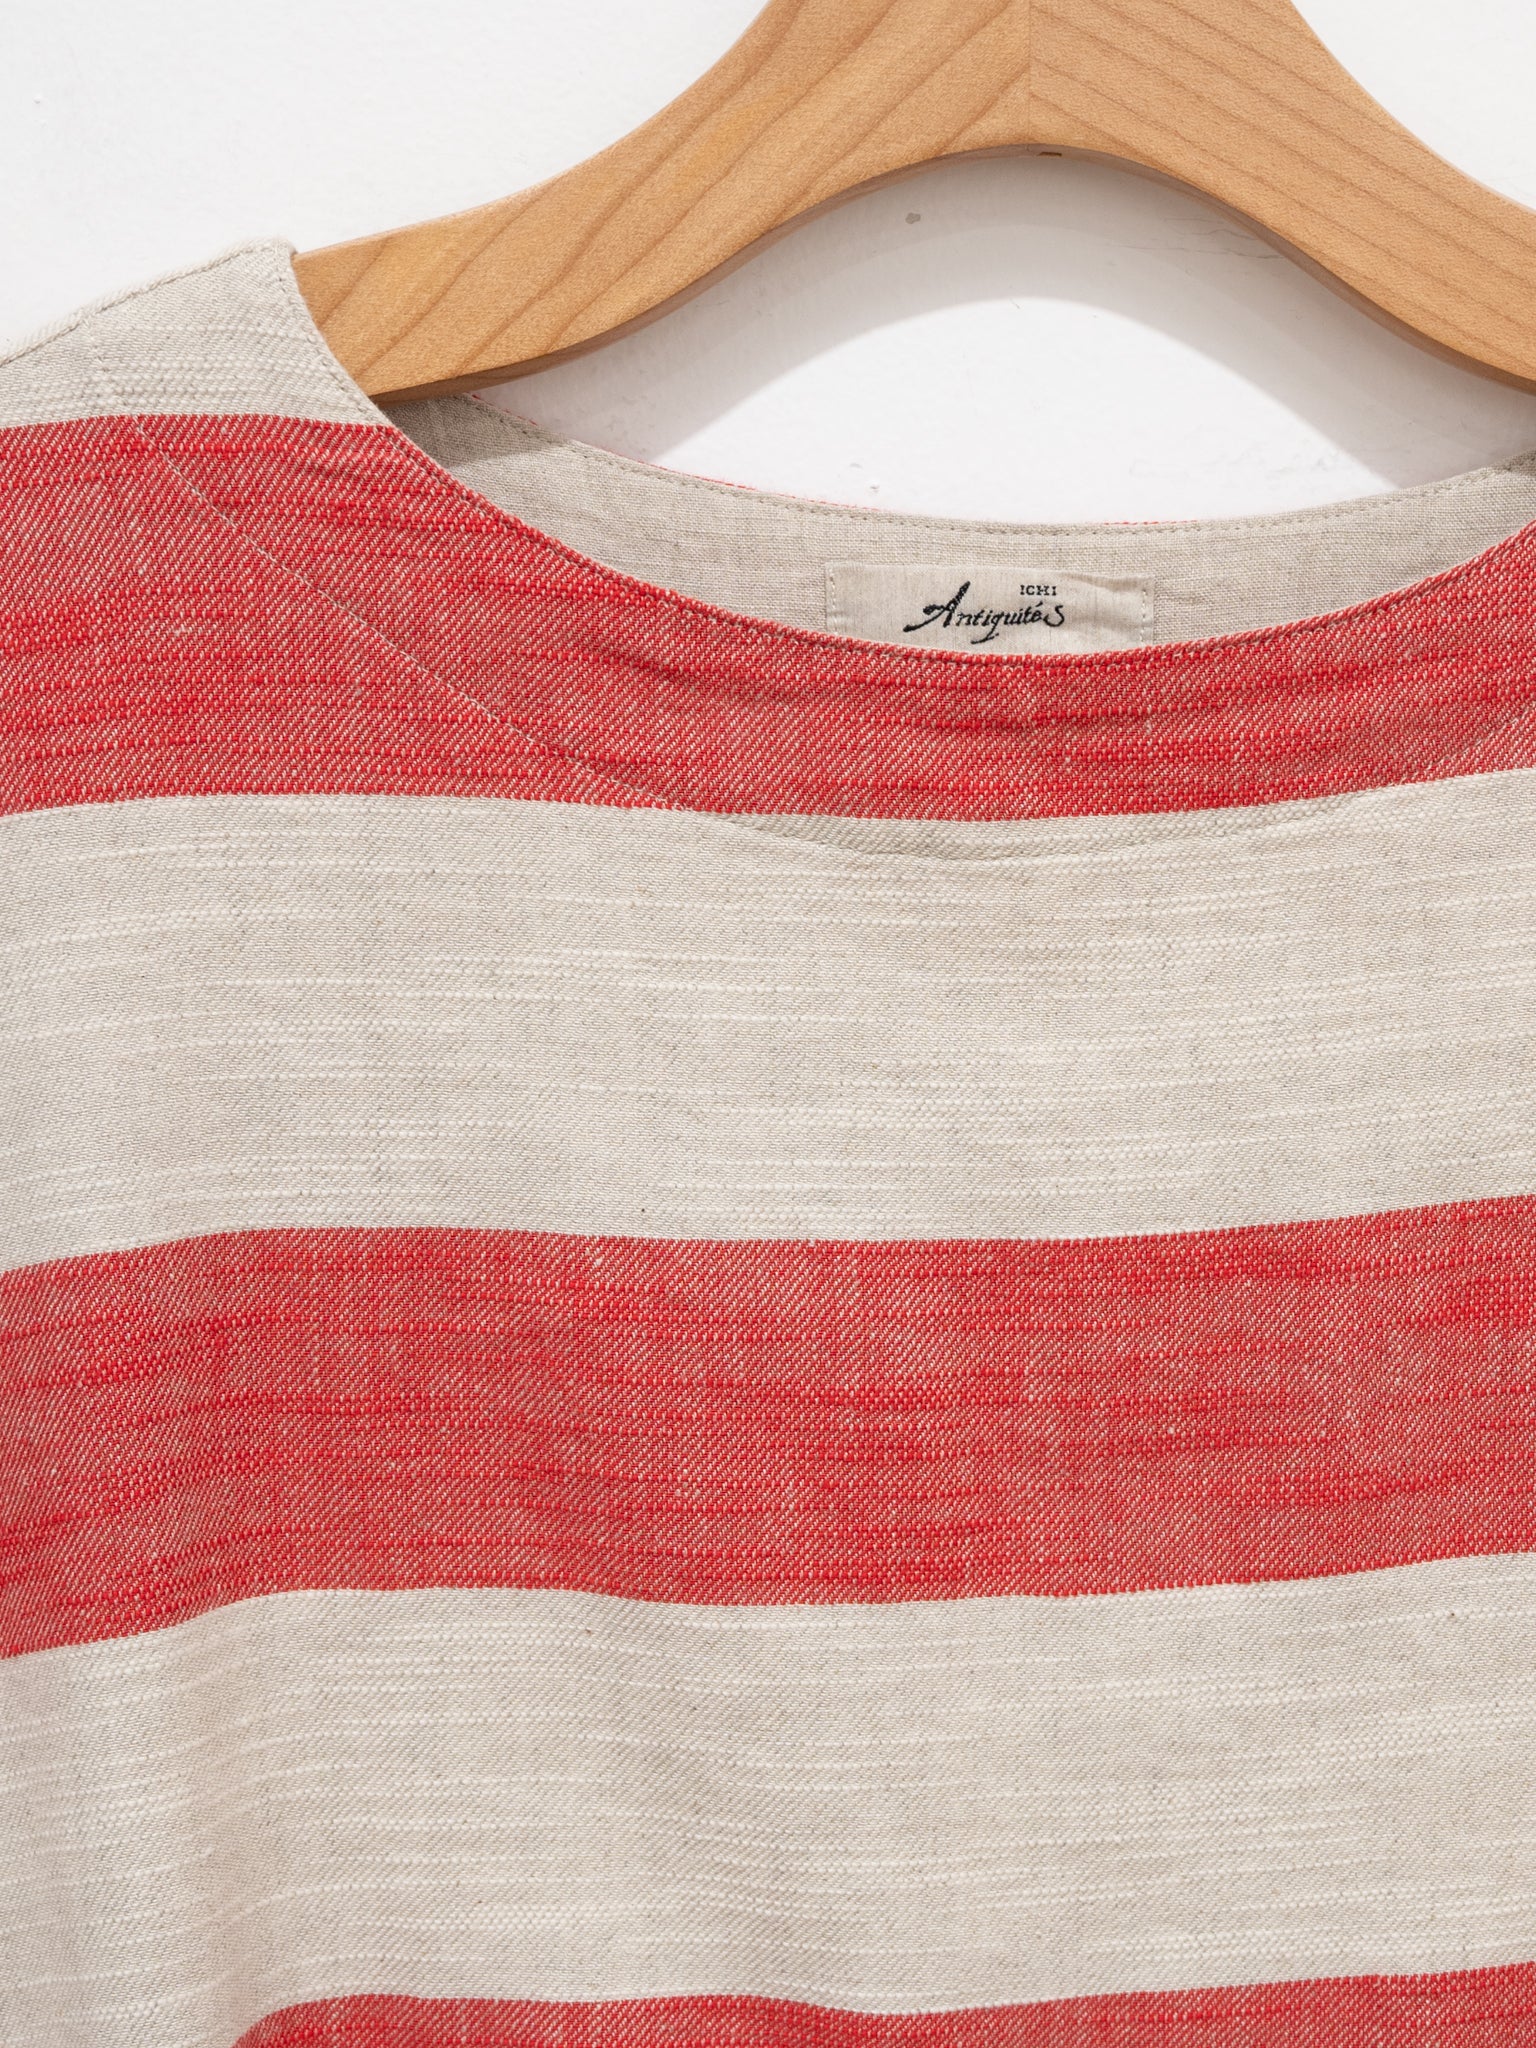 Namu Shop - Ichi Antiquites Linen Cotton Slub Stripes Dress - Red